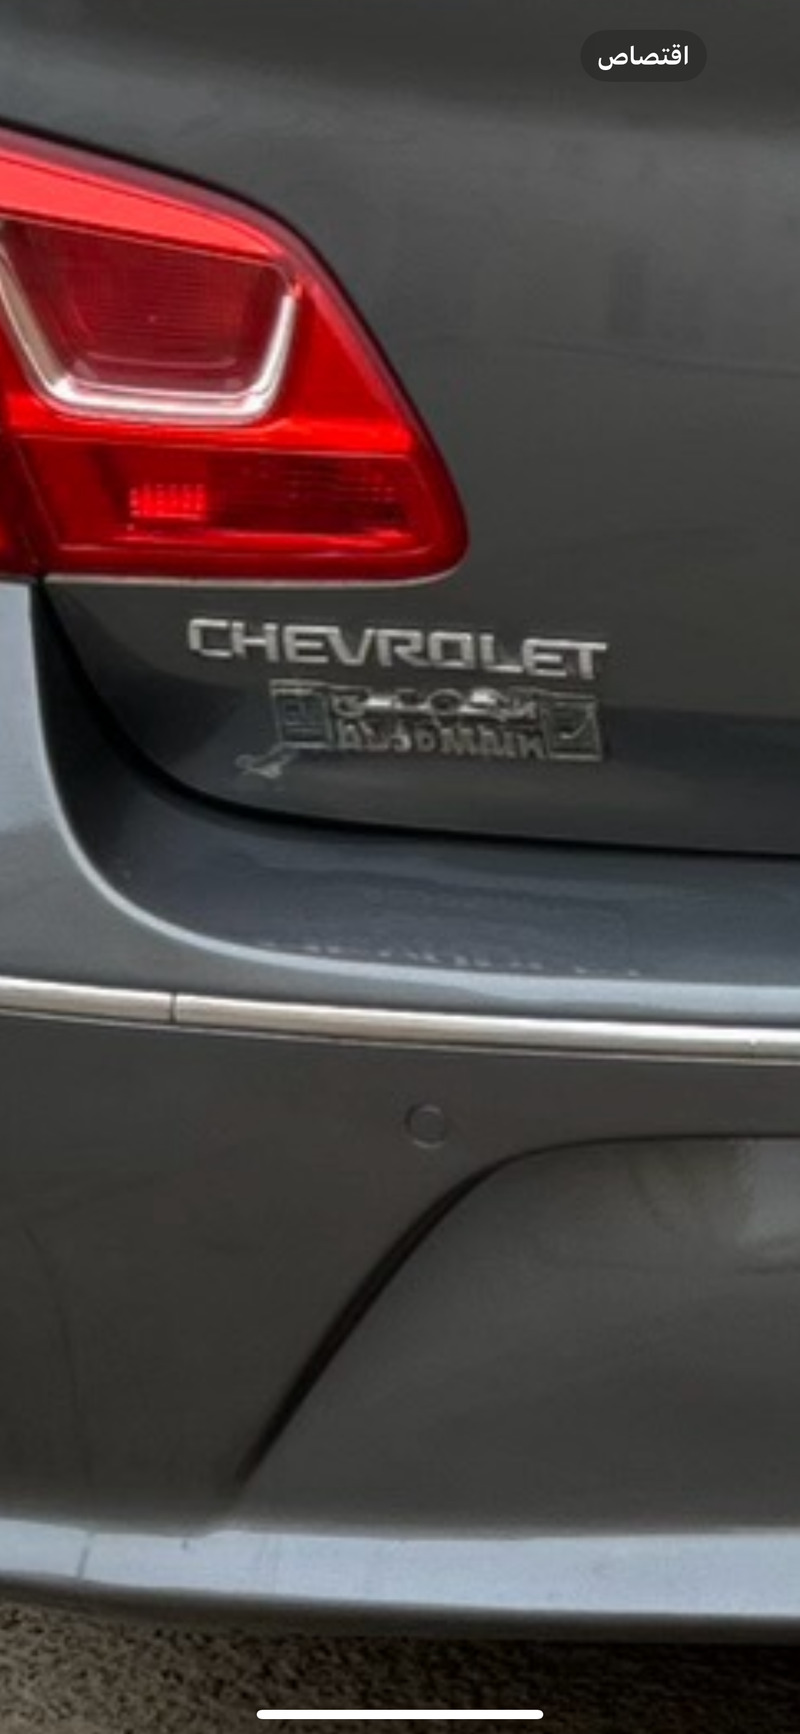 Used 2017 Chevrolet Cruze for sale in Riyadh